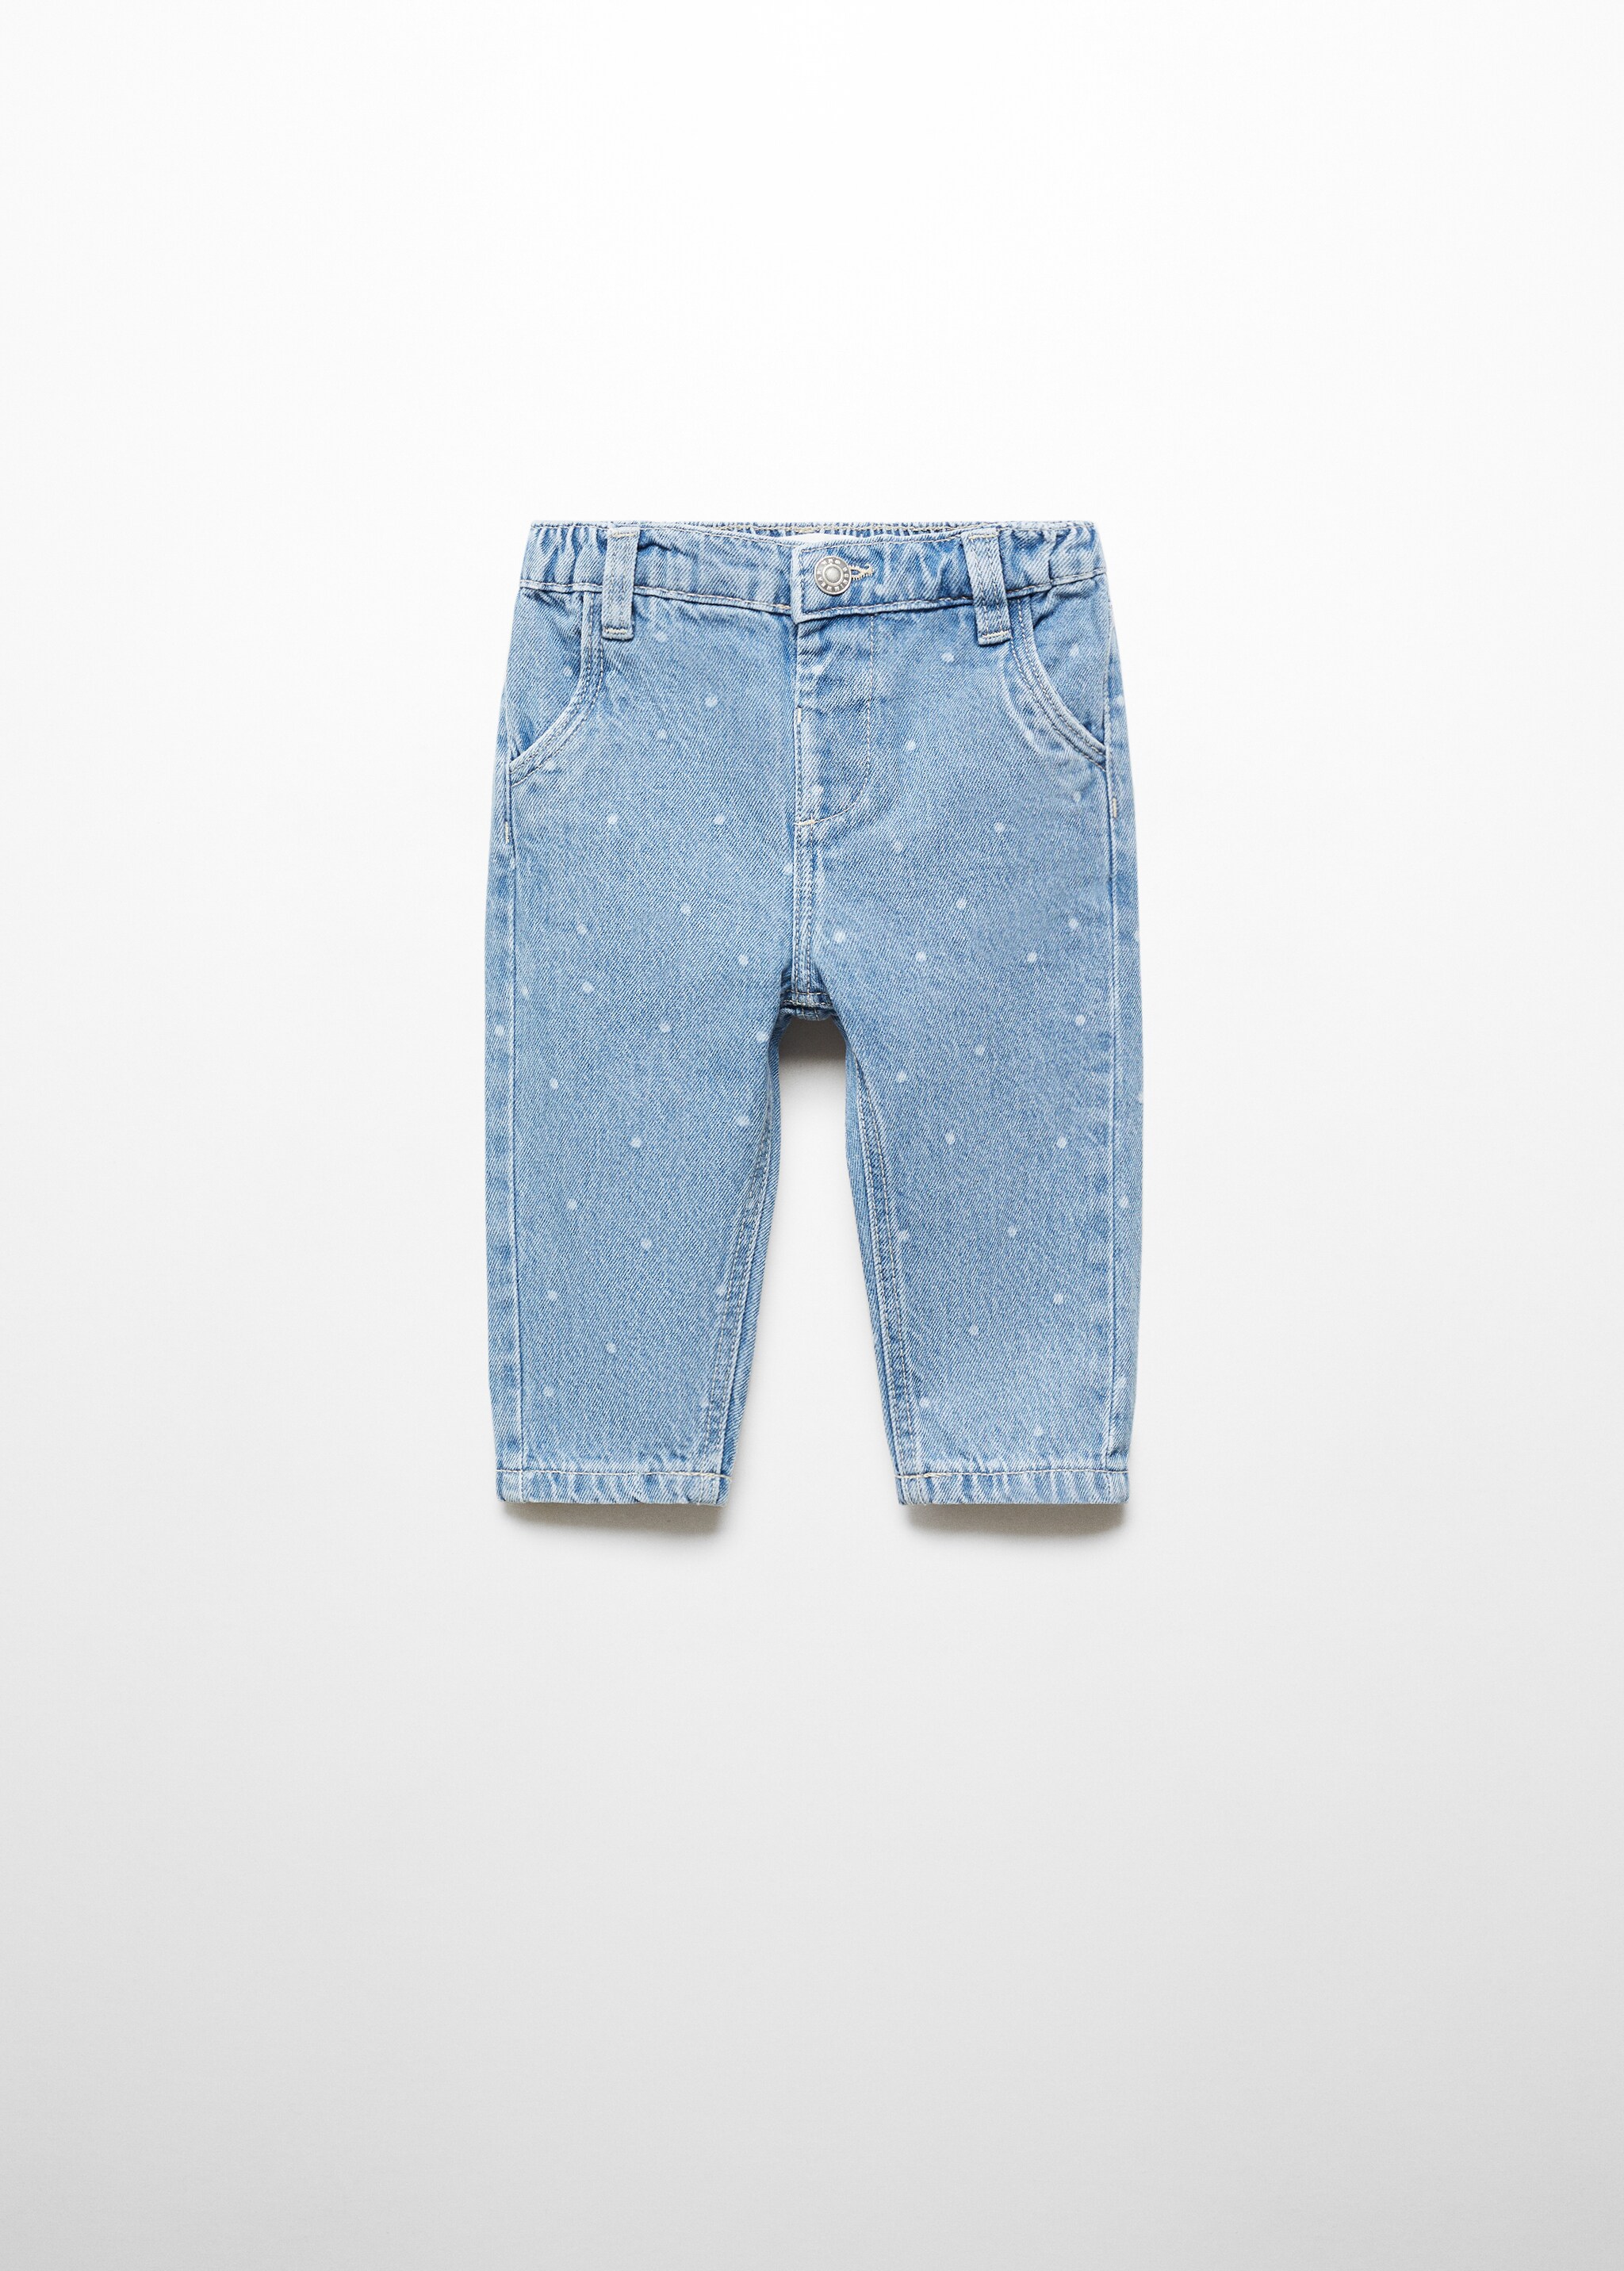 Jeans mit Polka Dots - Artikel ohne Model